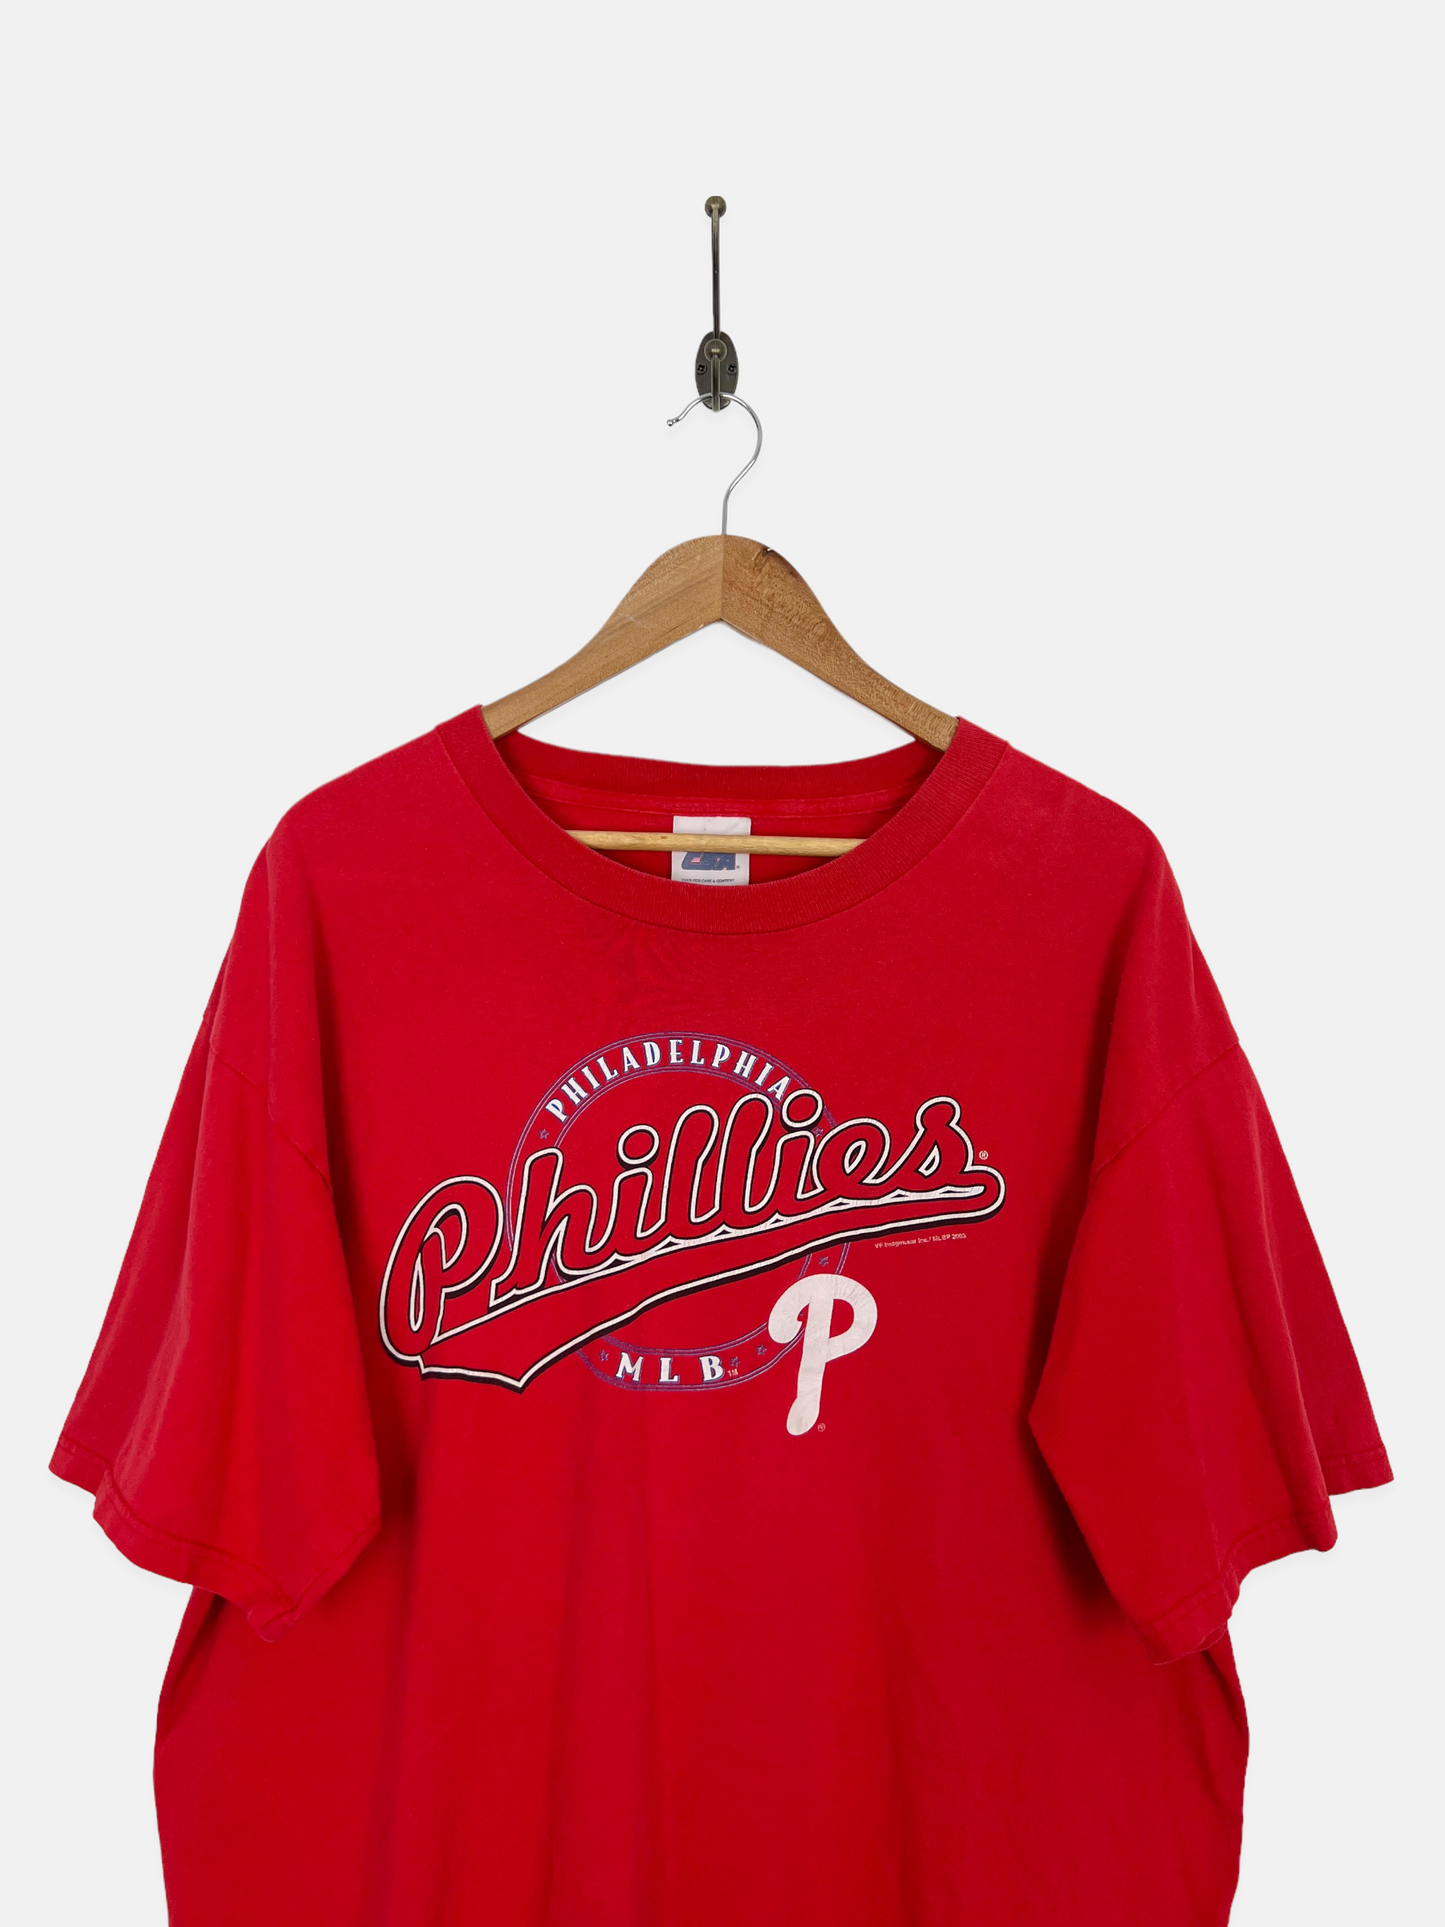 Philedelphia Phillies MLB Vintage T-Shirt Size XL